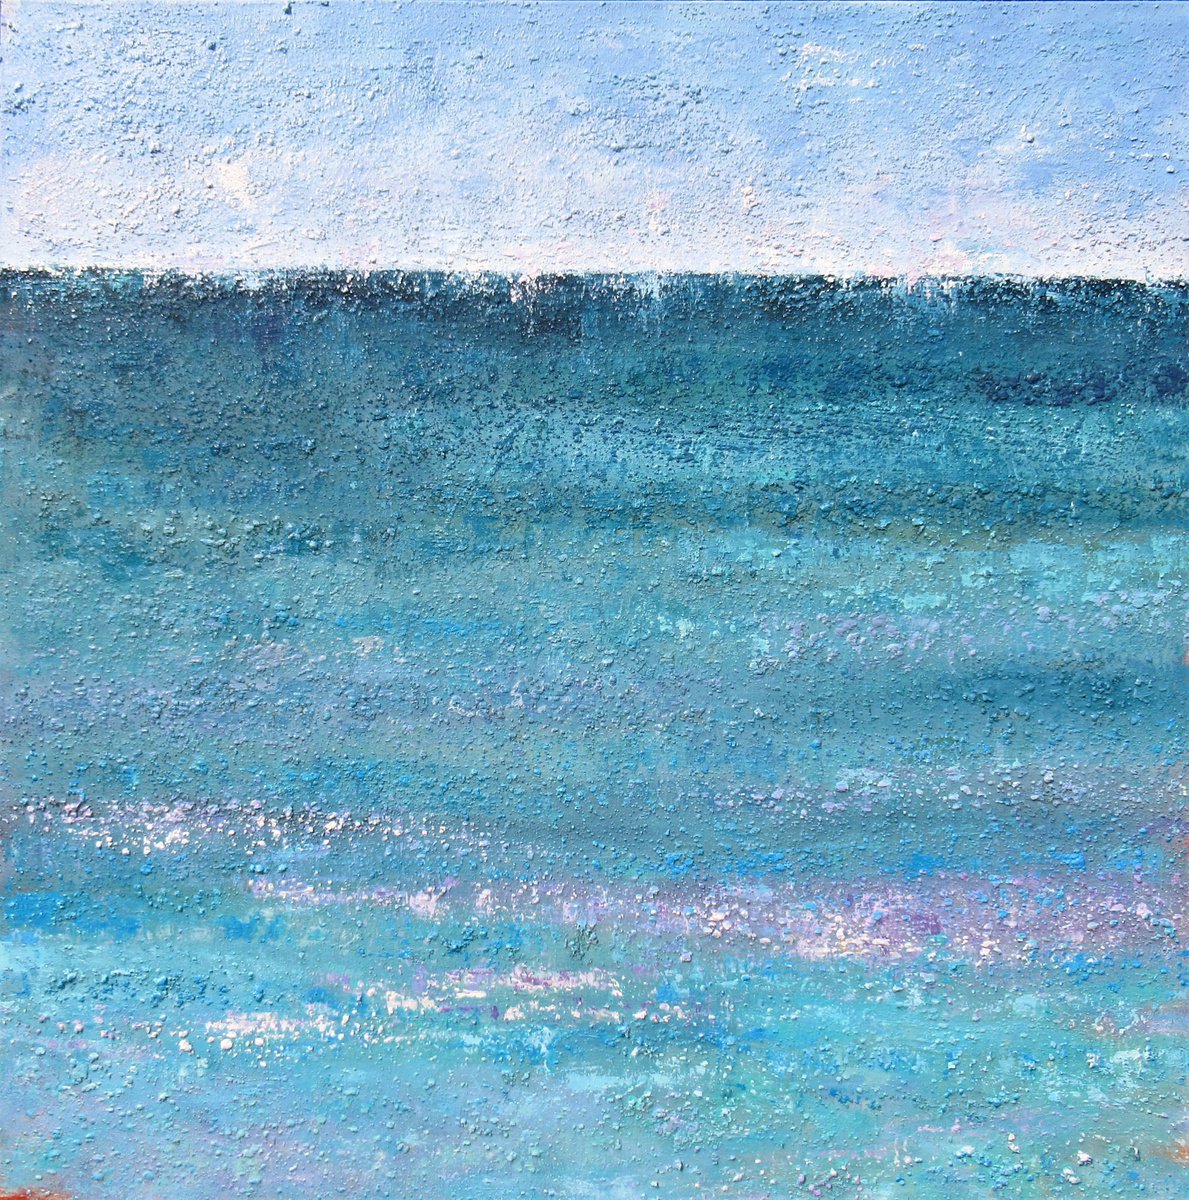 The Boundless Sea by Sherry Edmondson